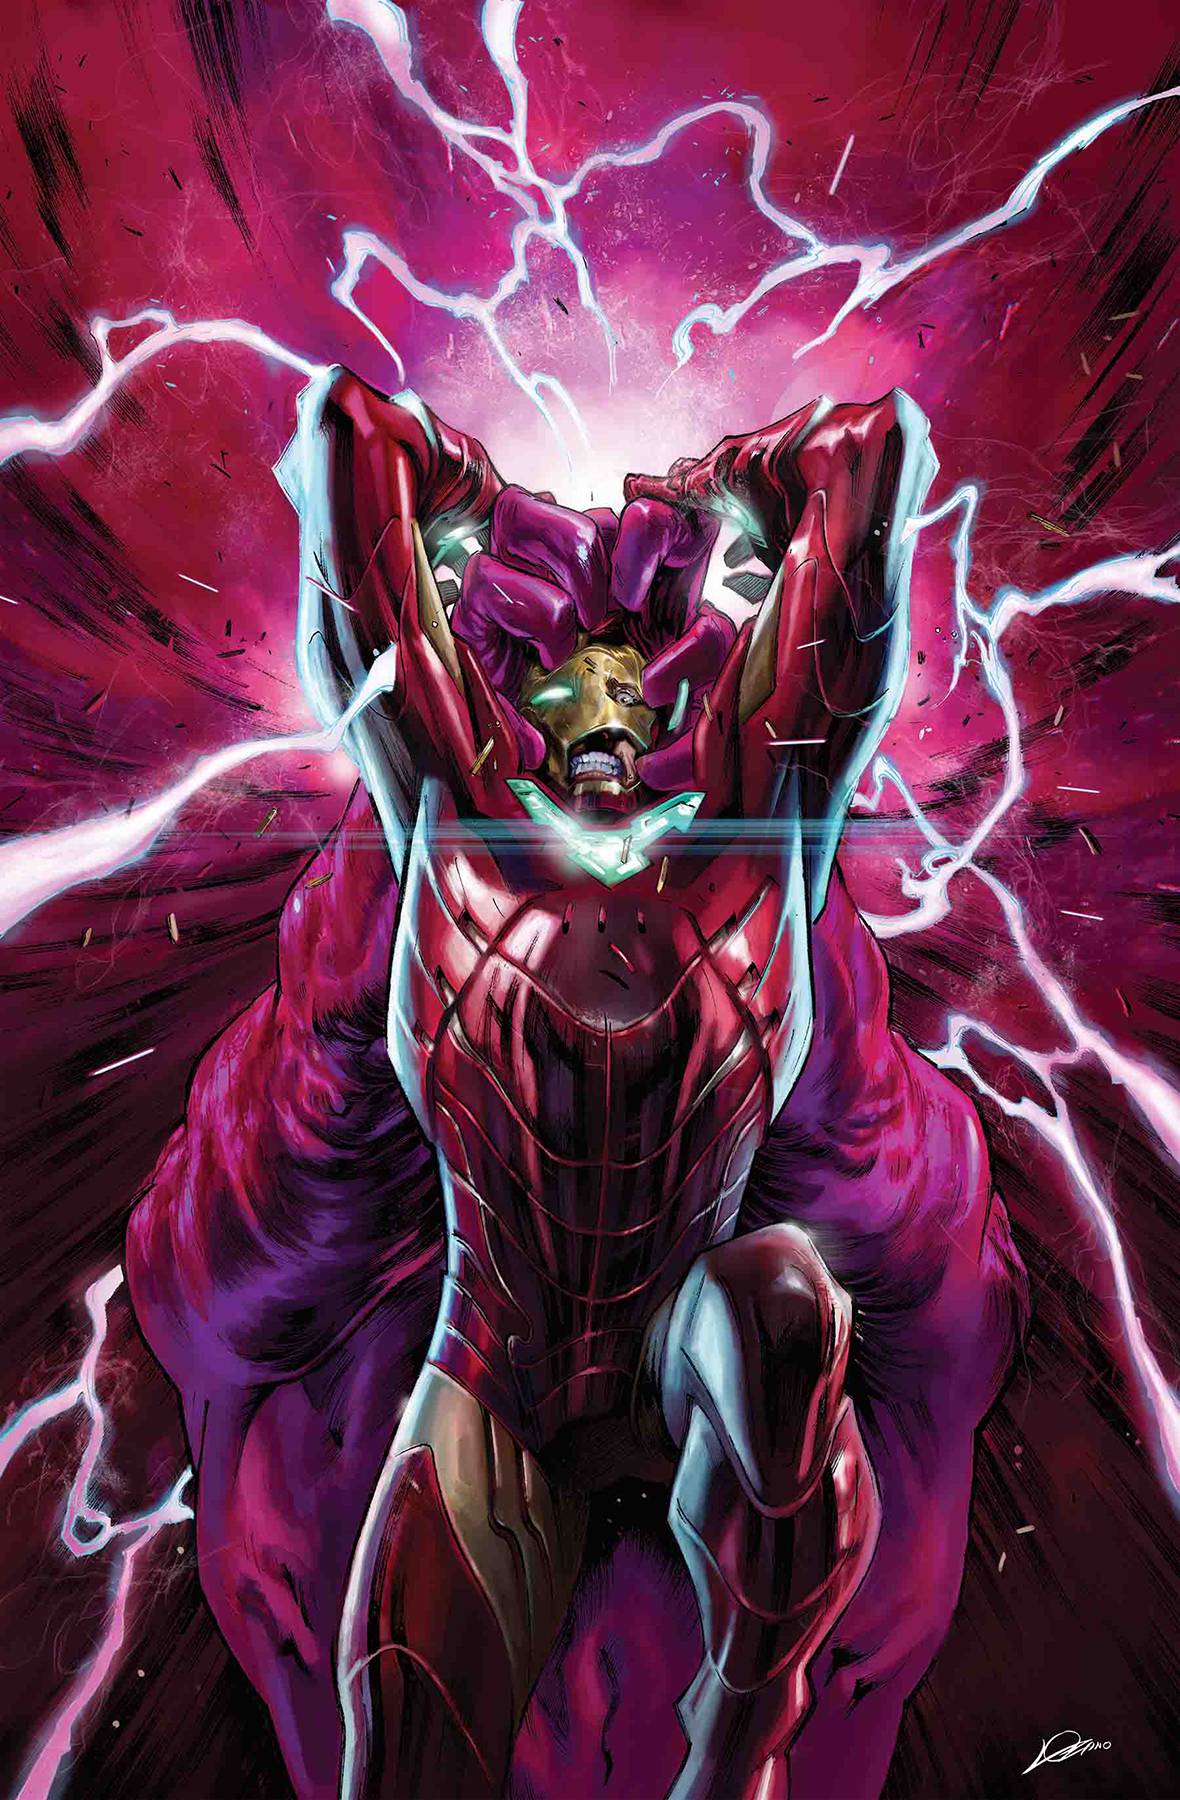 Tony Stark Iron Man #6 [2018]